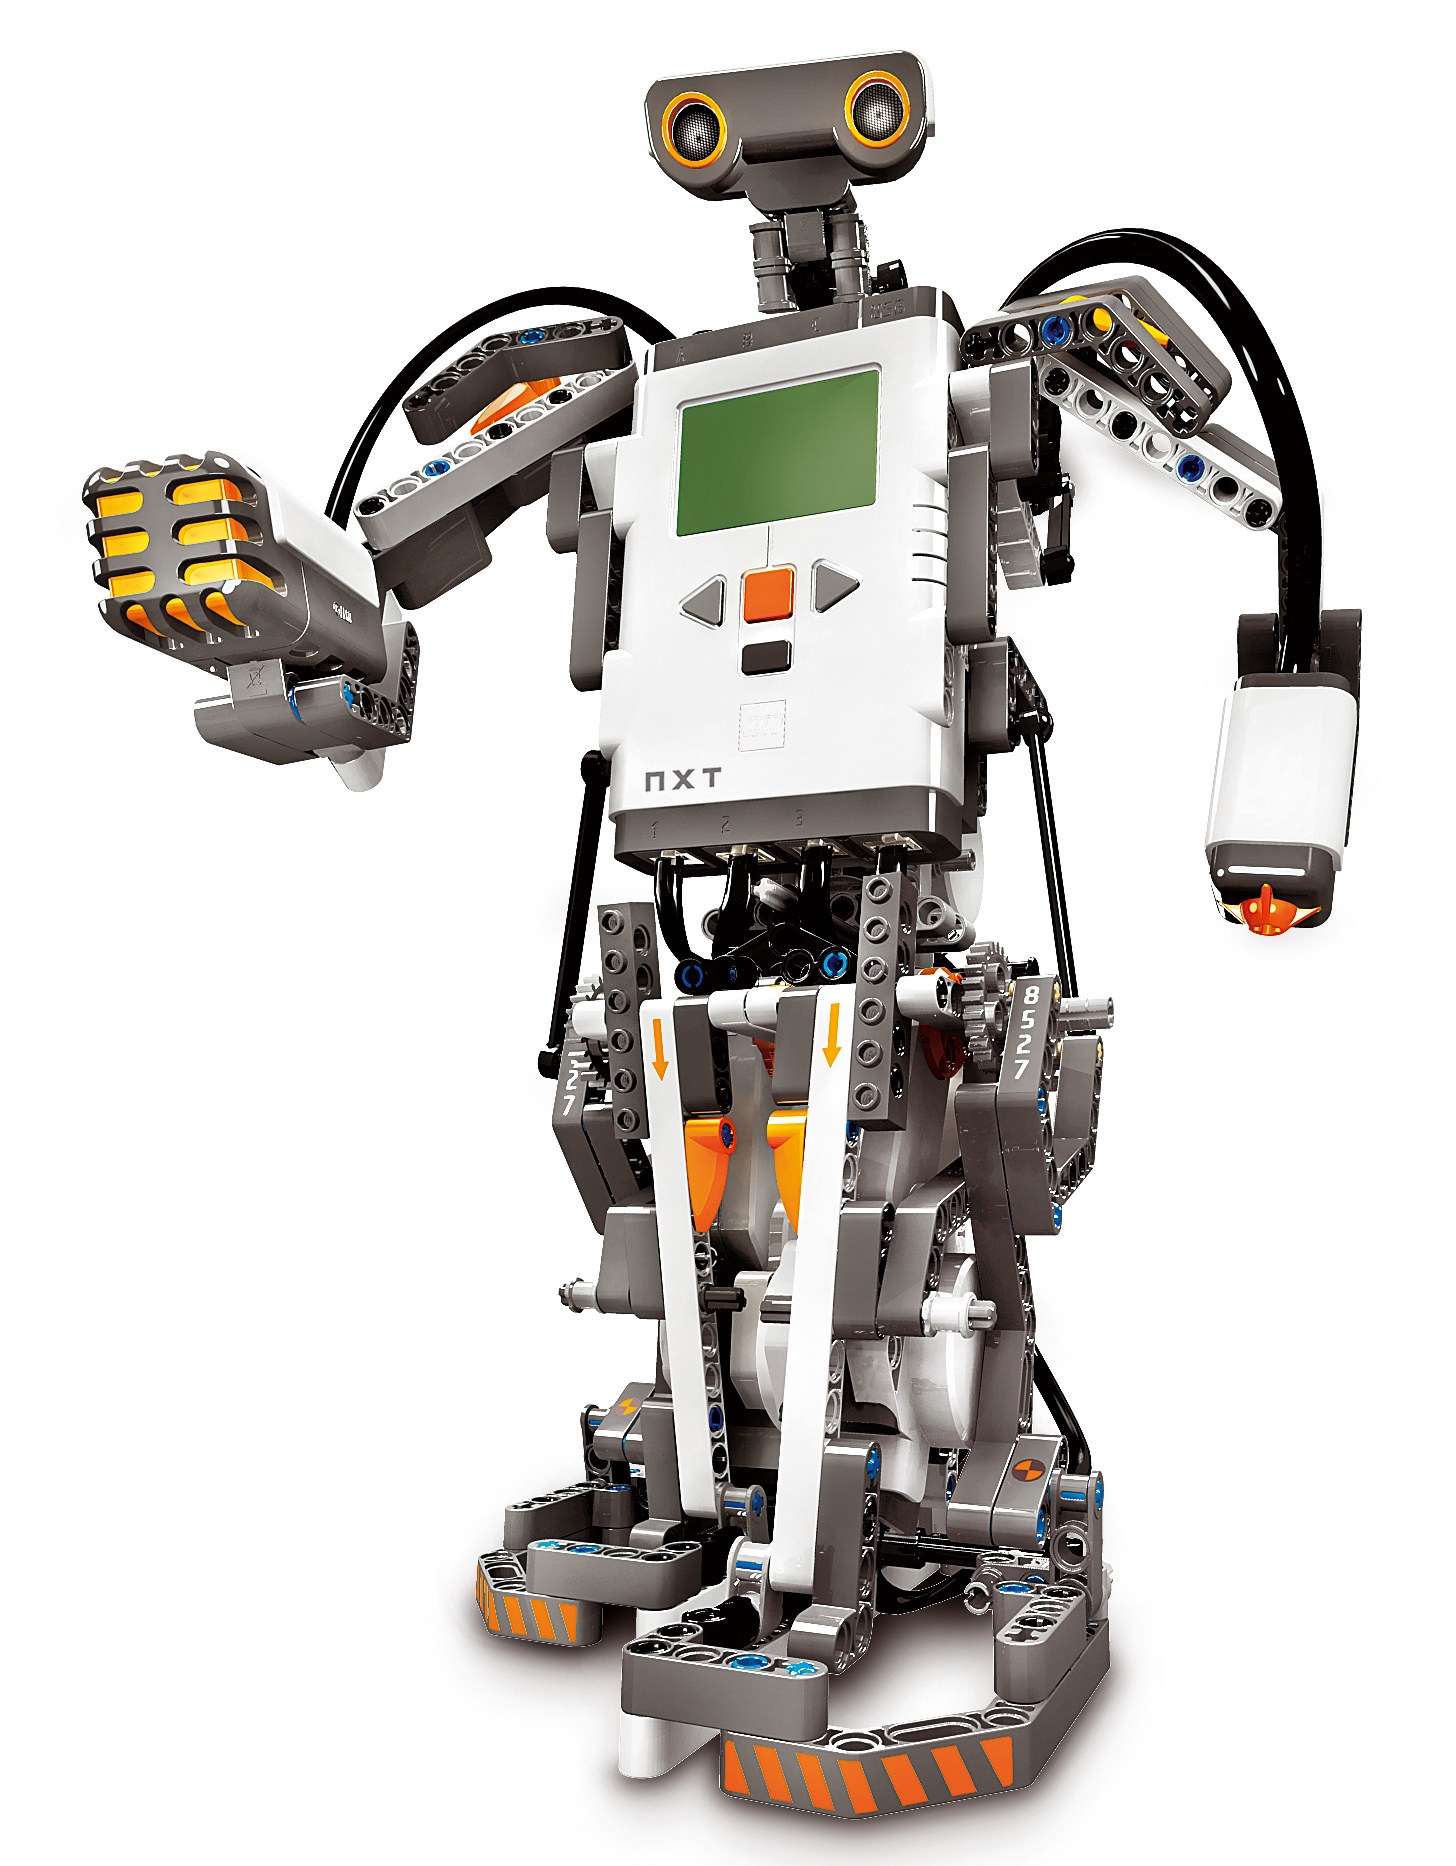 Robot Toys Help Kids Get Into Robotics